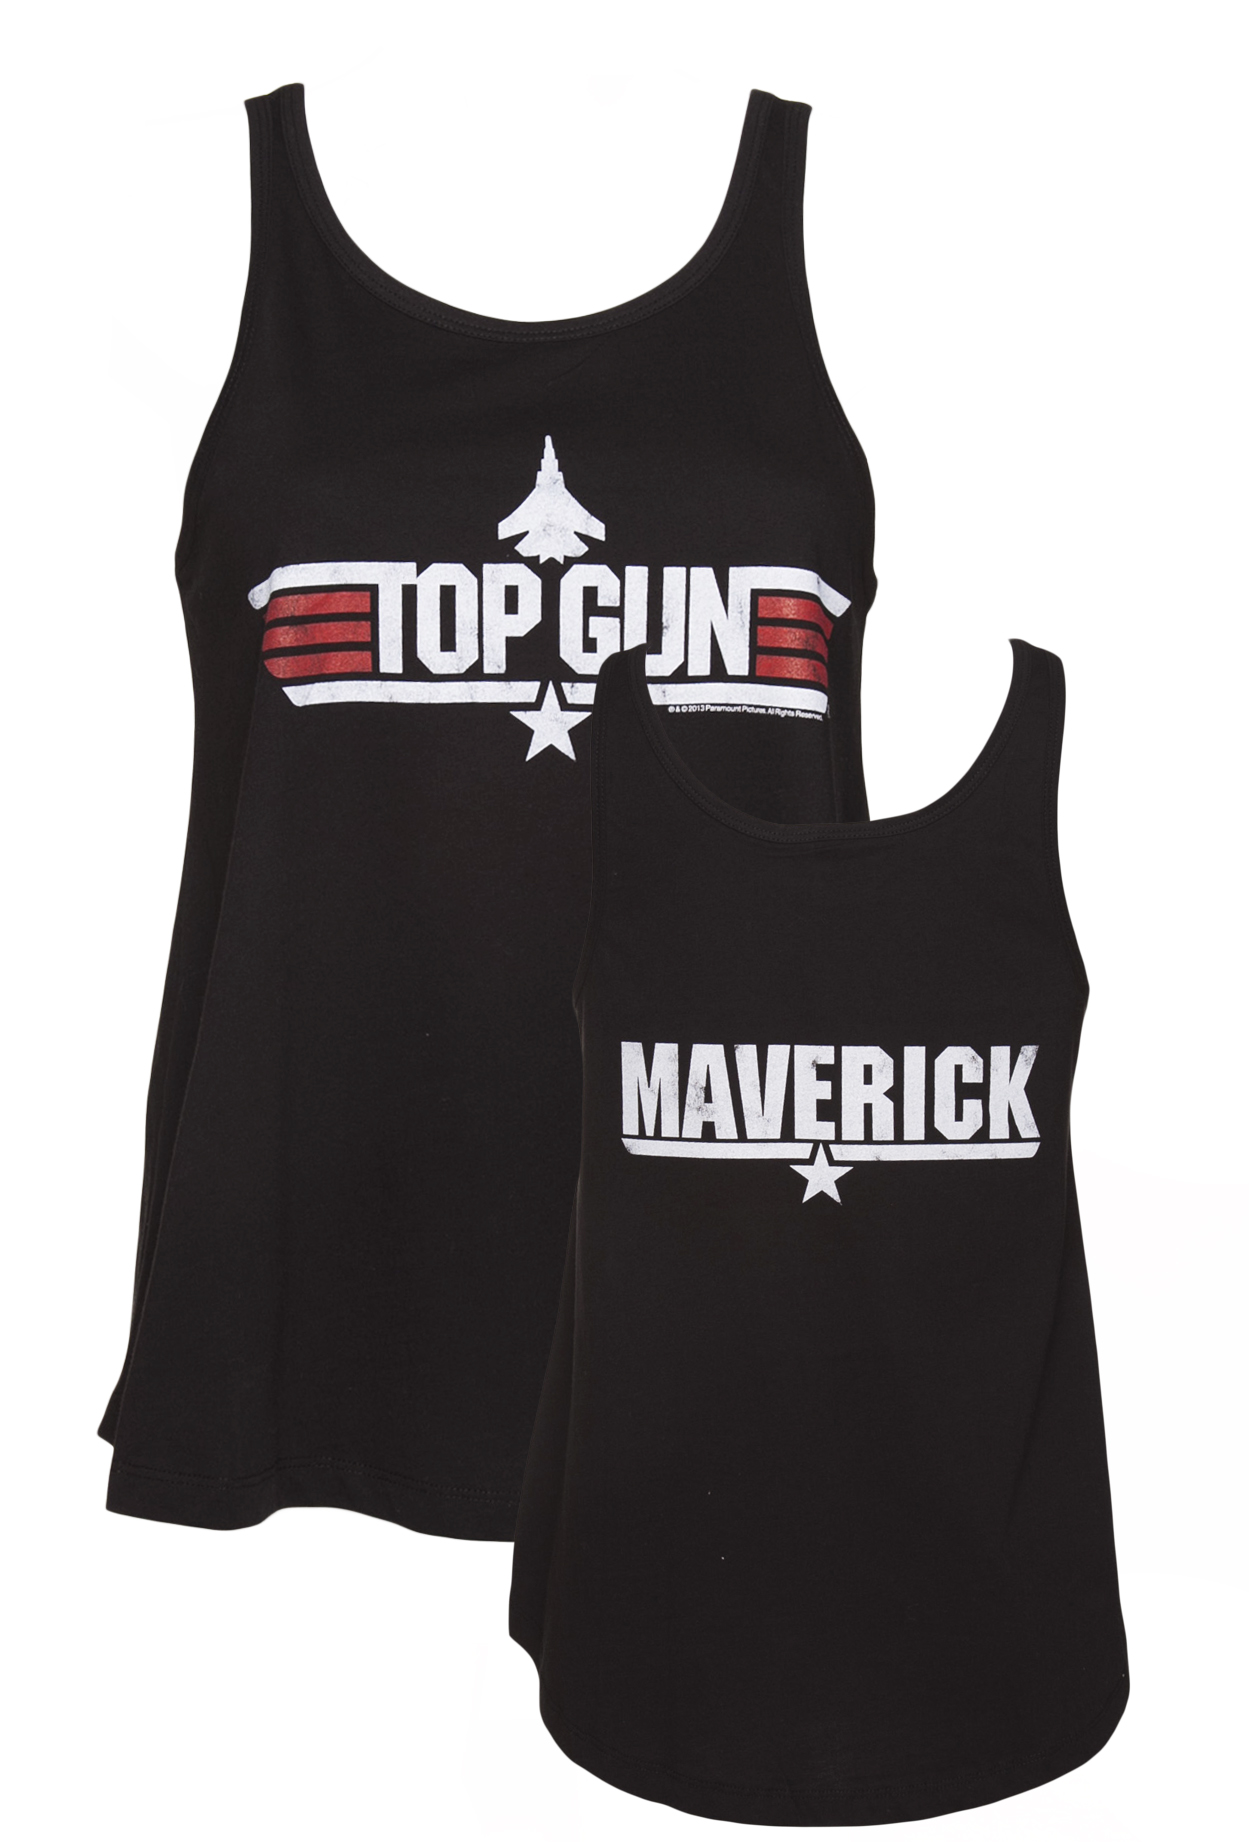 TruffleShuffle Ladies Black Top Gun Maverick Swing Vest